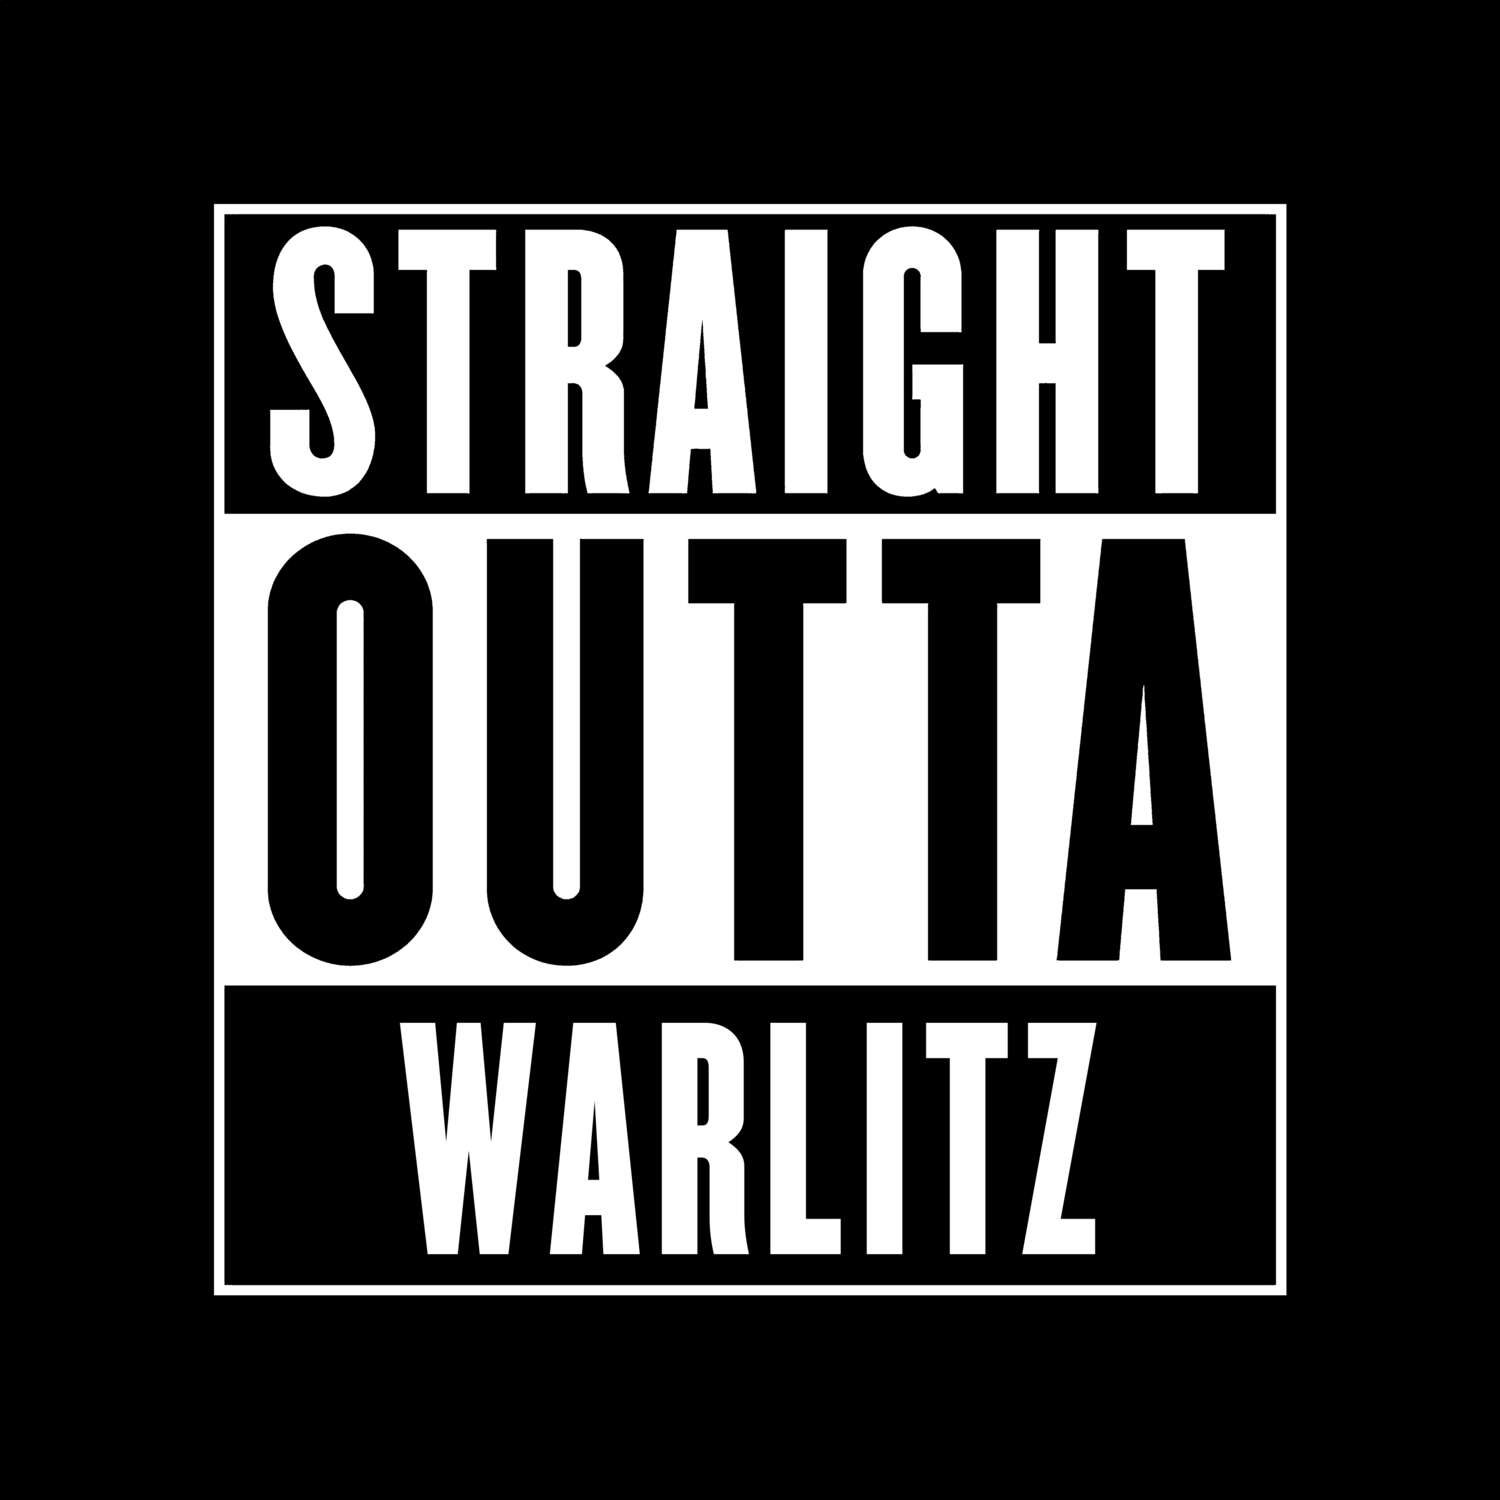 Warlitz T-Shirt »Straight Outta«